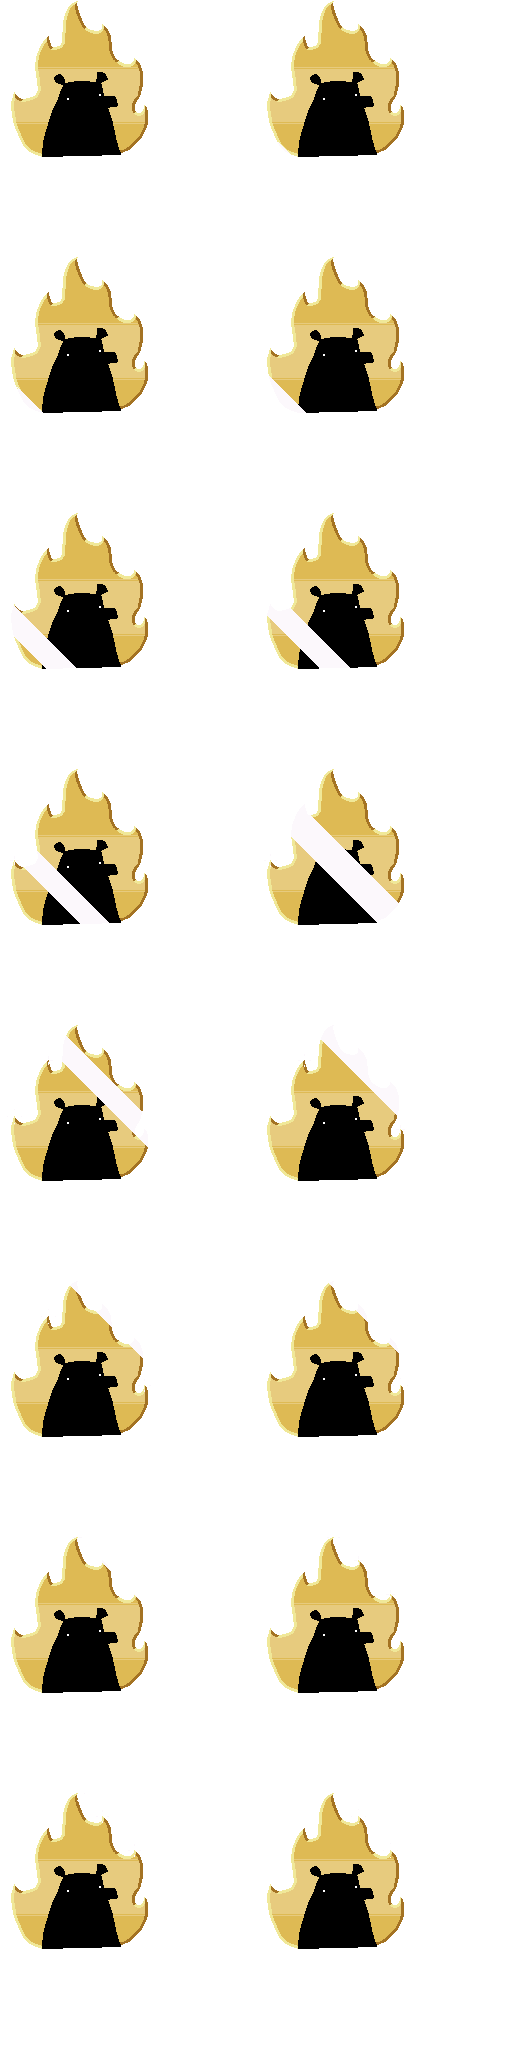 GUN GODZ - Vlambeer Logo